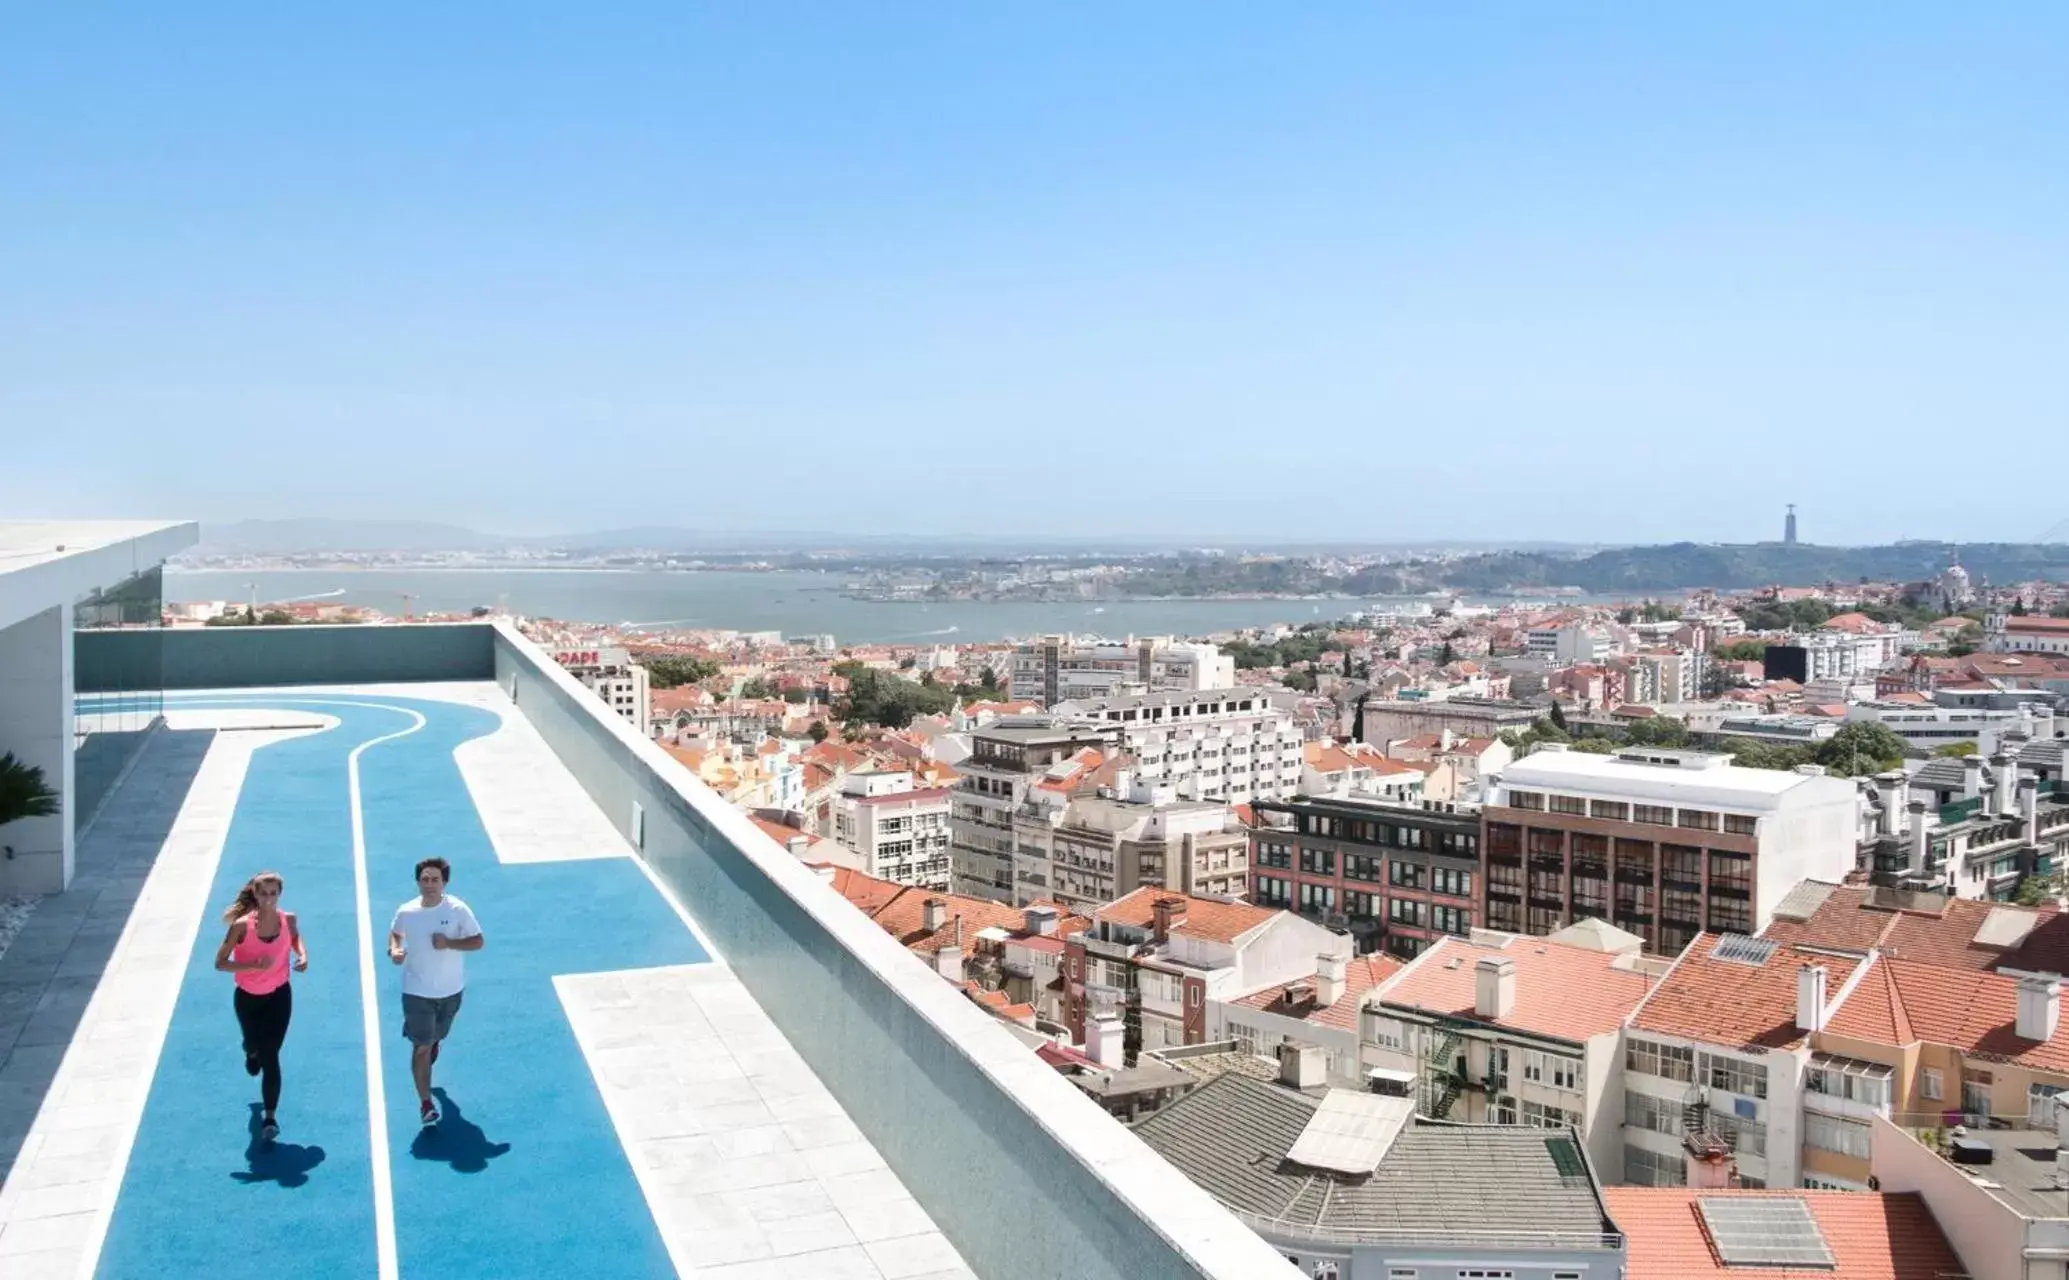 Fitness centre/facilities in Four Seasons Hotel Ritz Lisbon